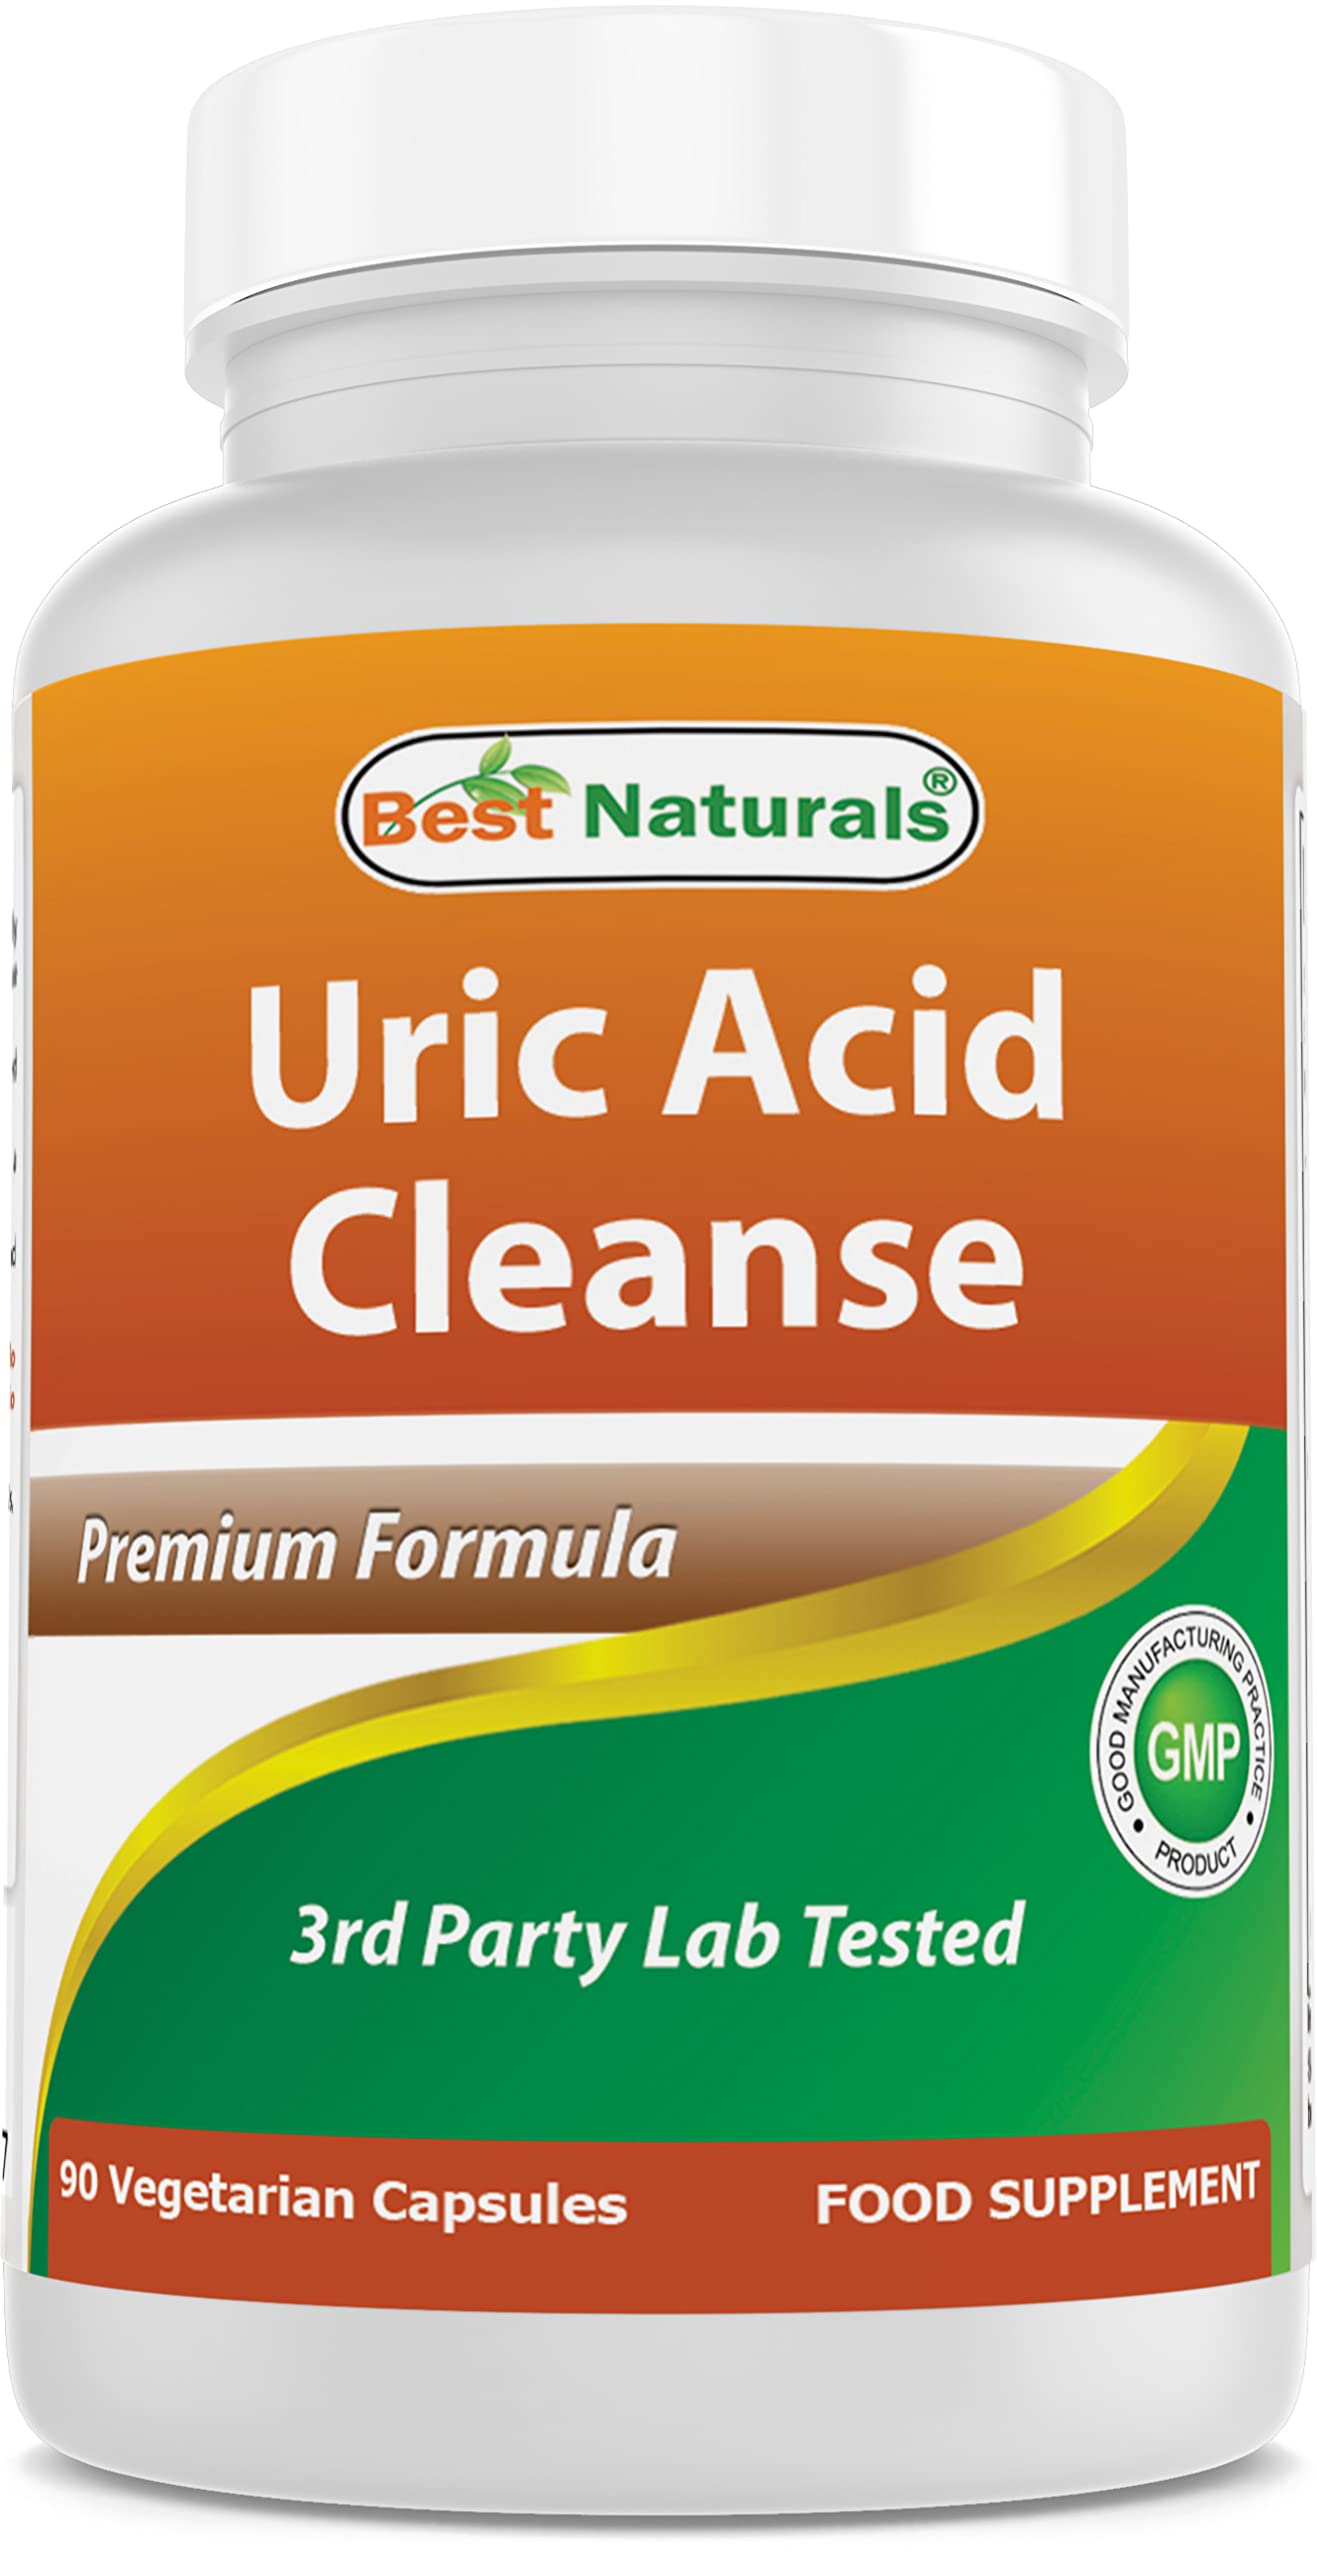 Best Naturals Uric Acid Cleanse Vitamins for Men and Women - 90 Veggie Capsules